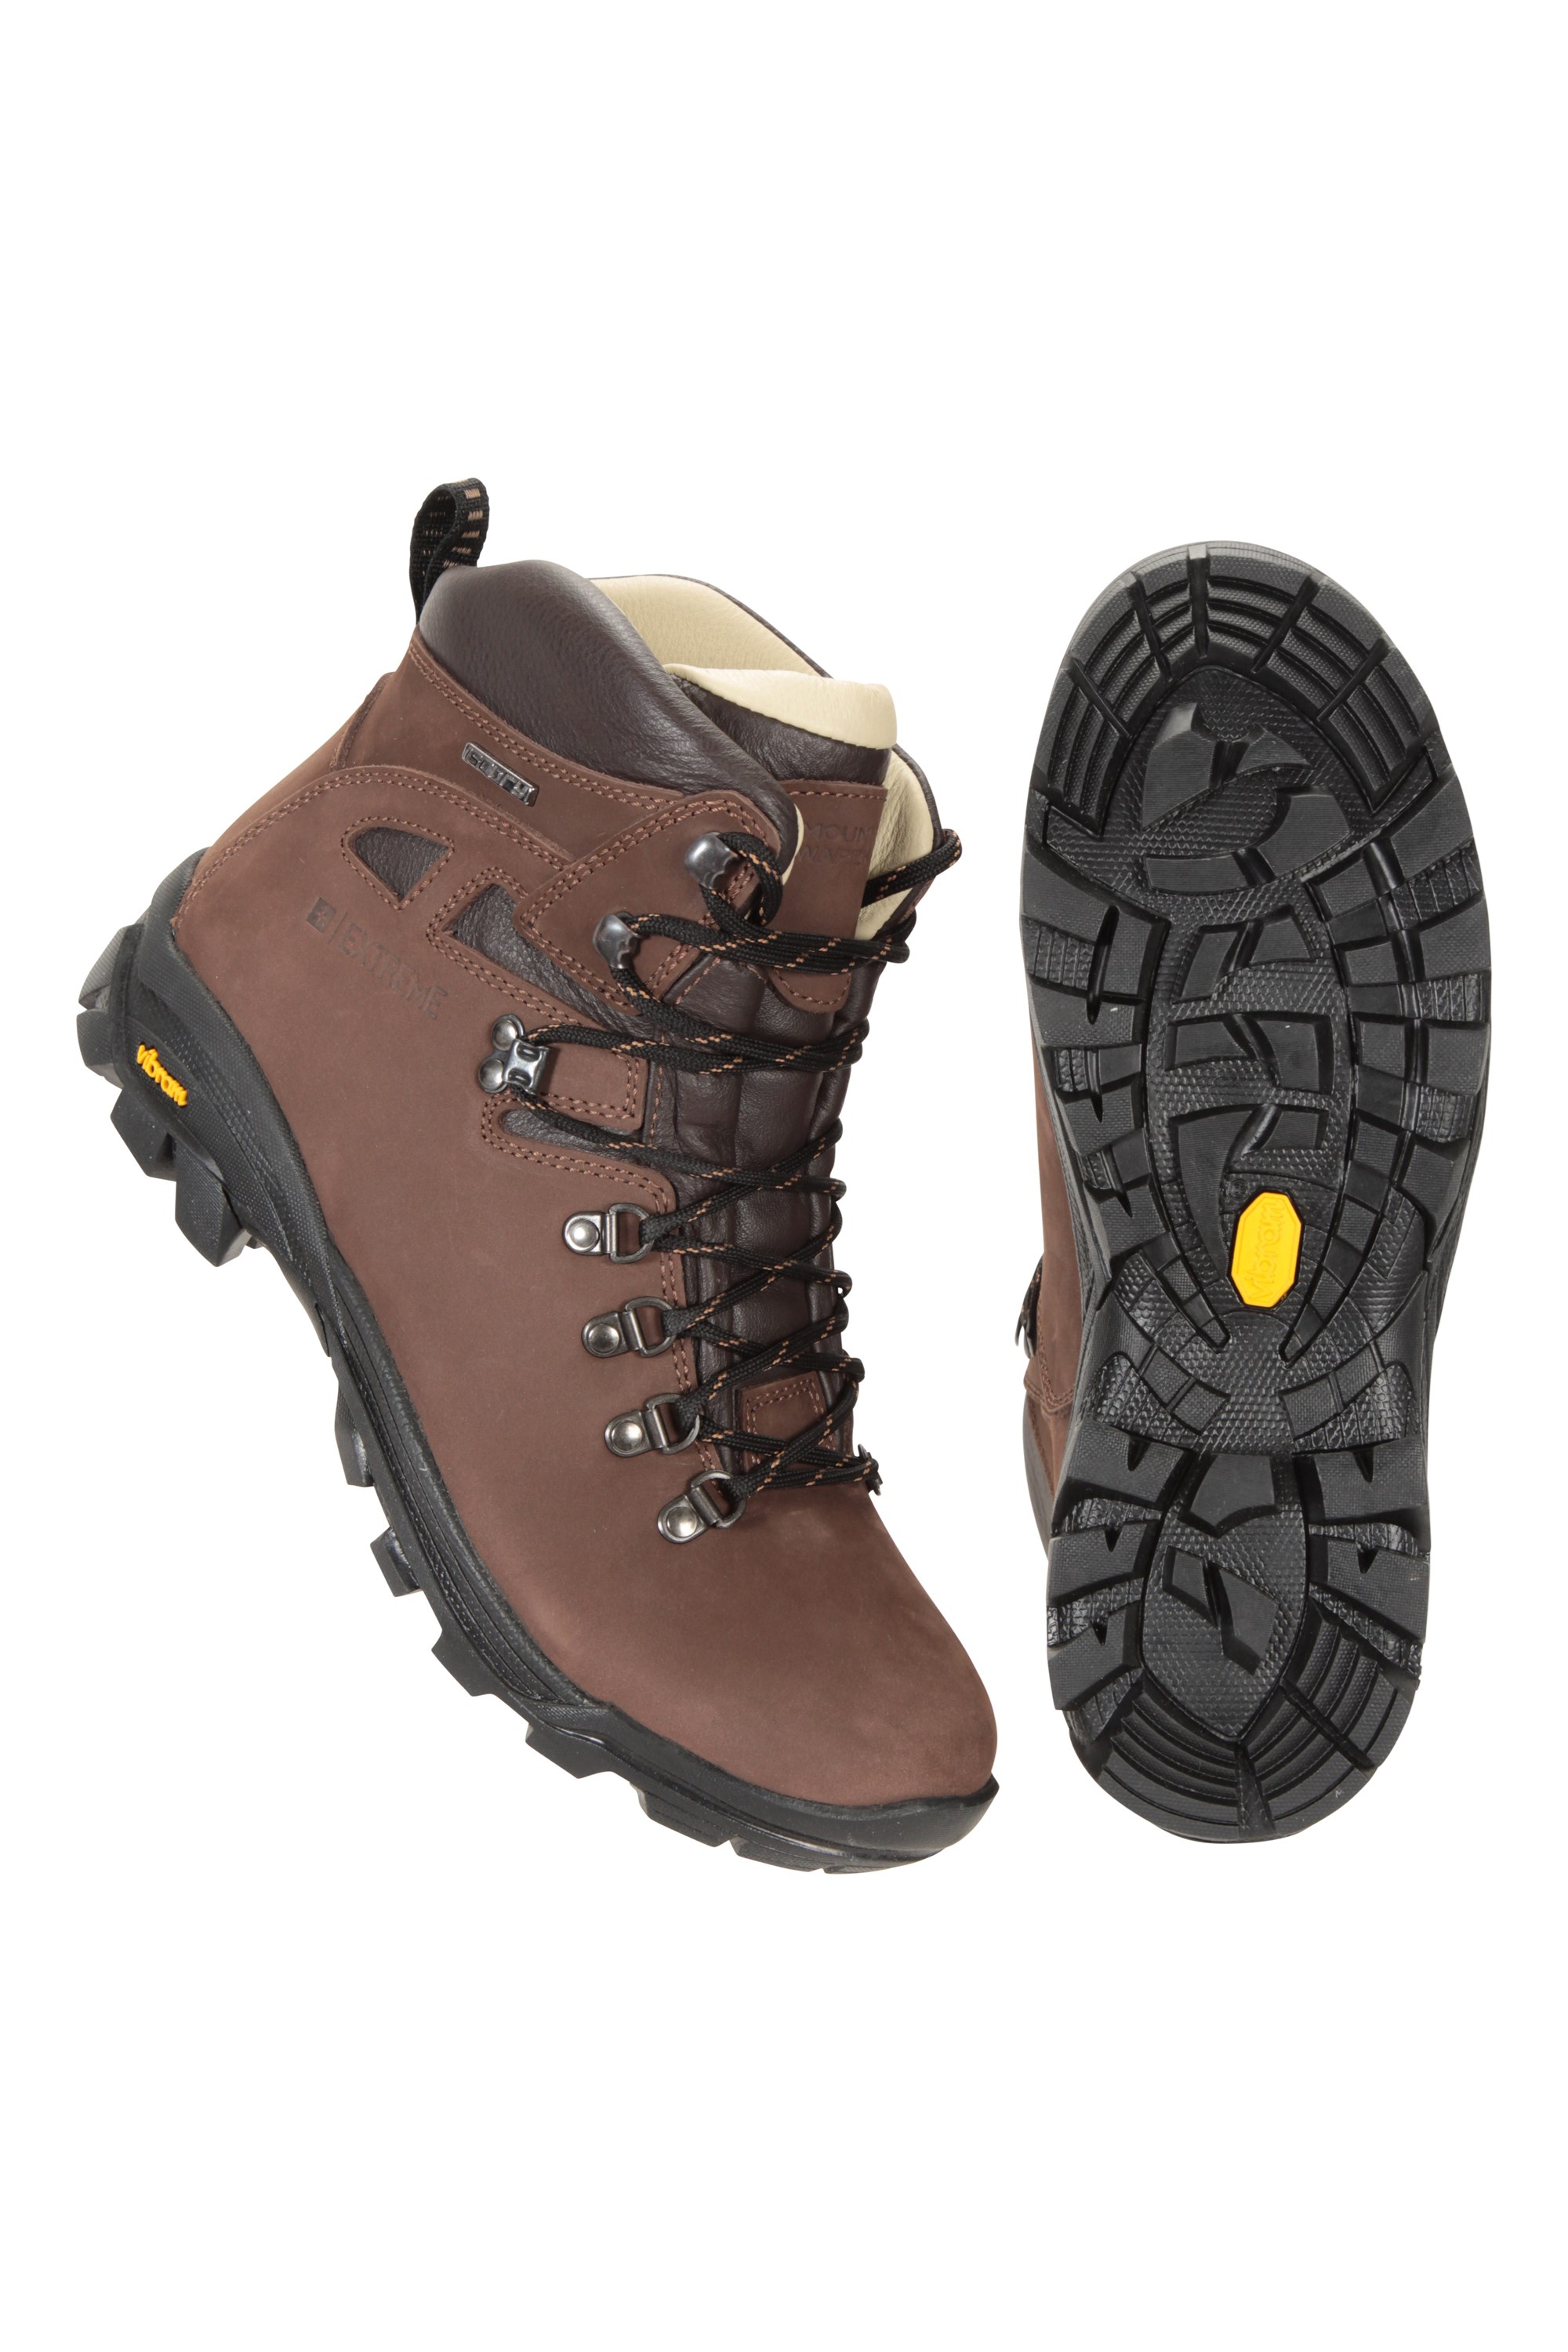 Mountain Warehouse Latitude Mens Vibram Waterproof Hiking Boots Brown 7 M US Men